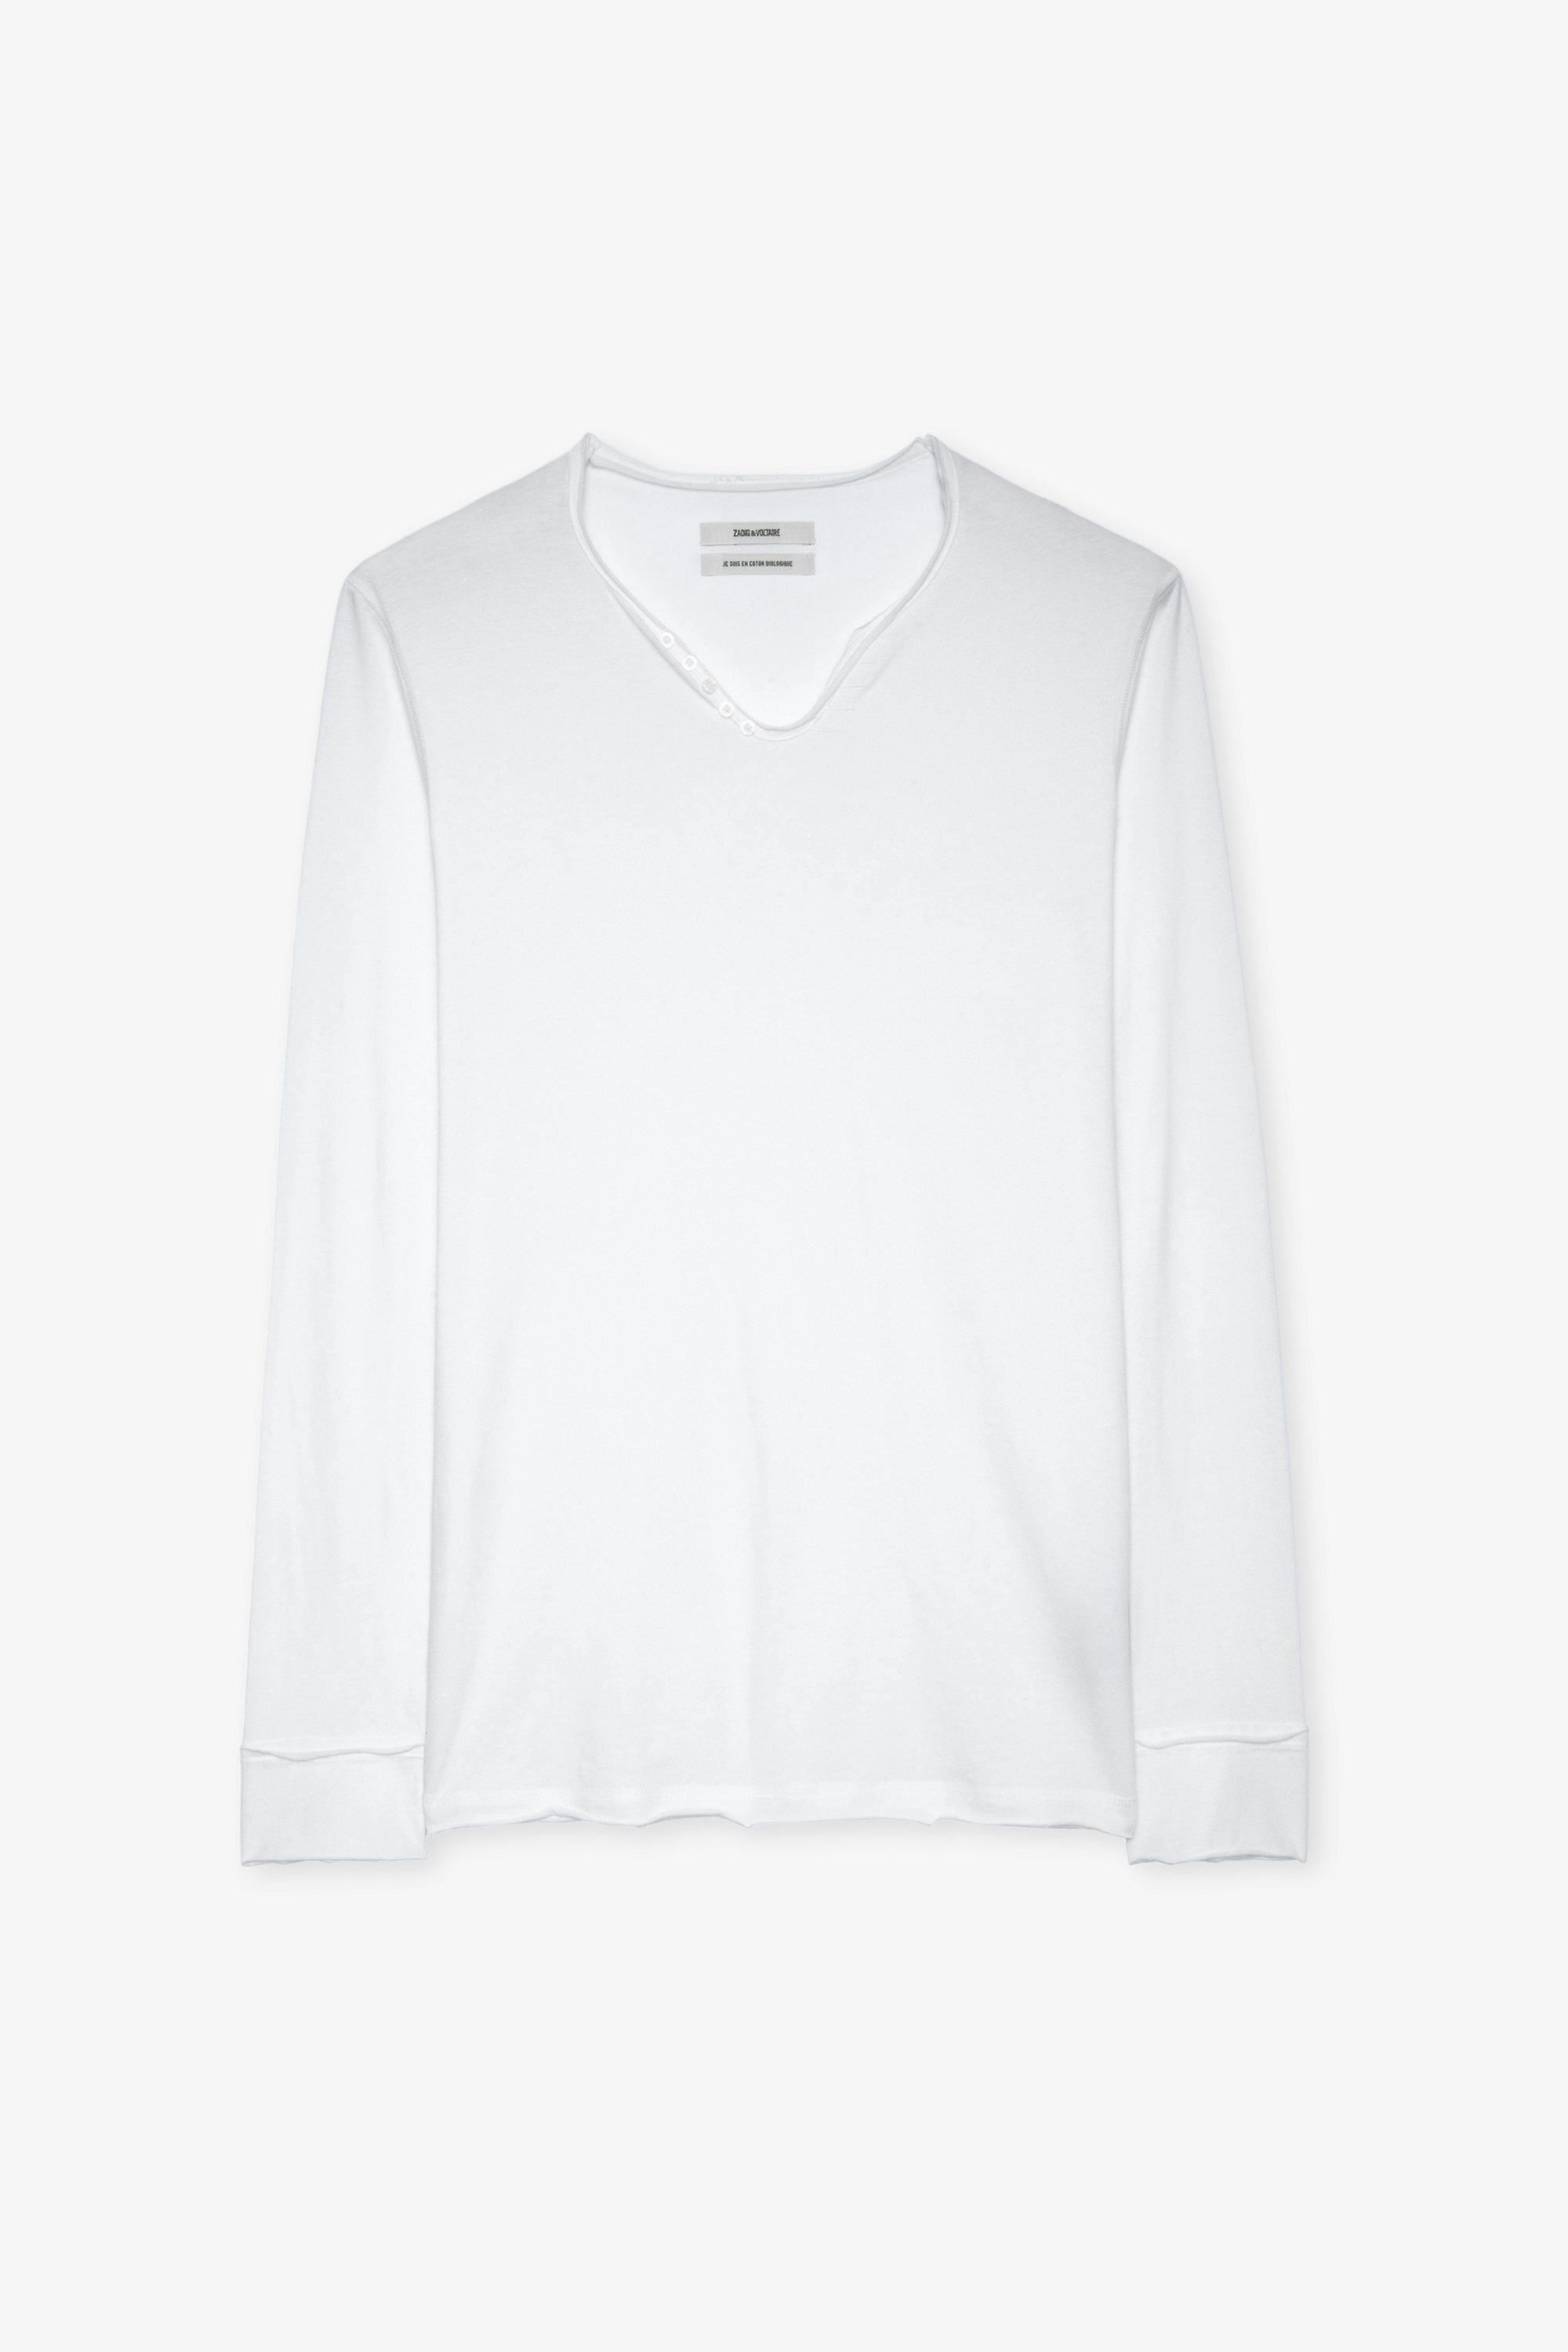 Monastir T-shirt - Men’s white cotton henley T-shirt